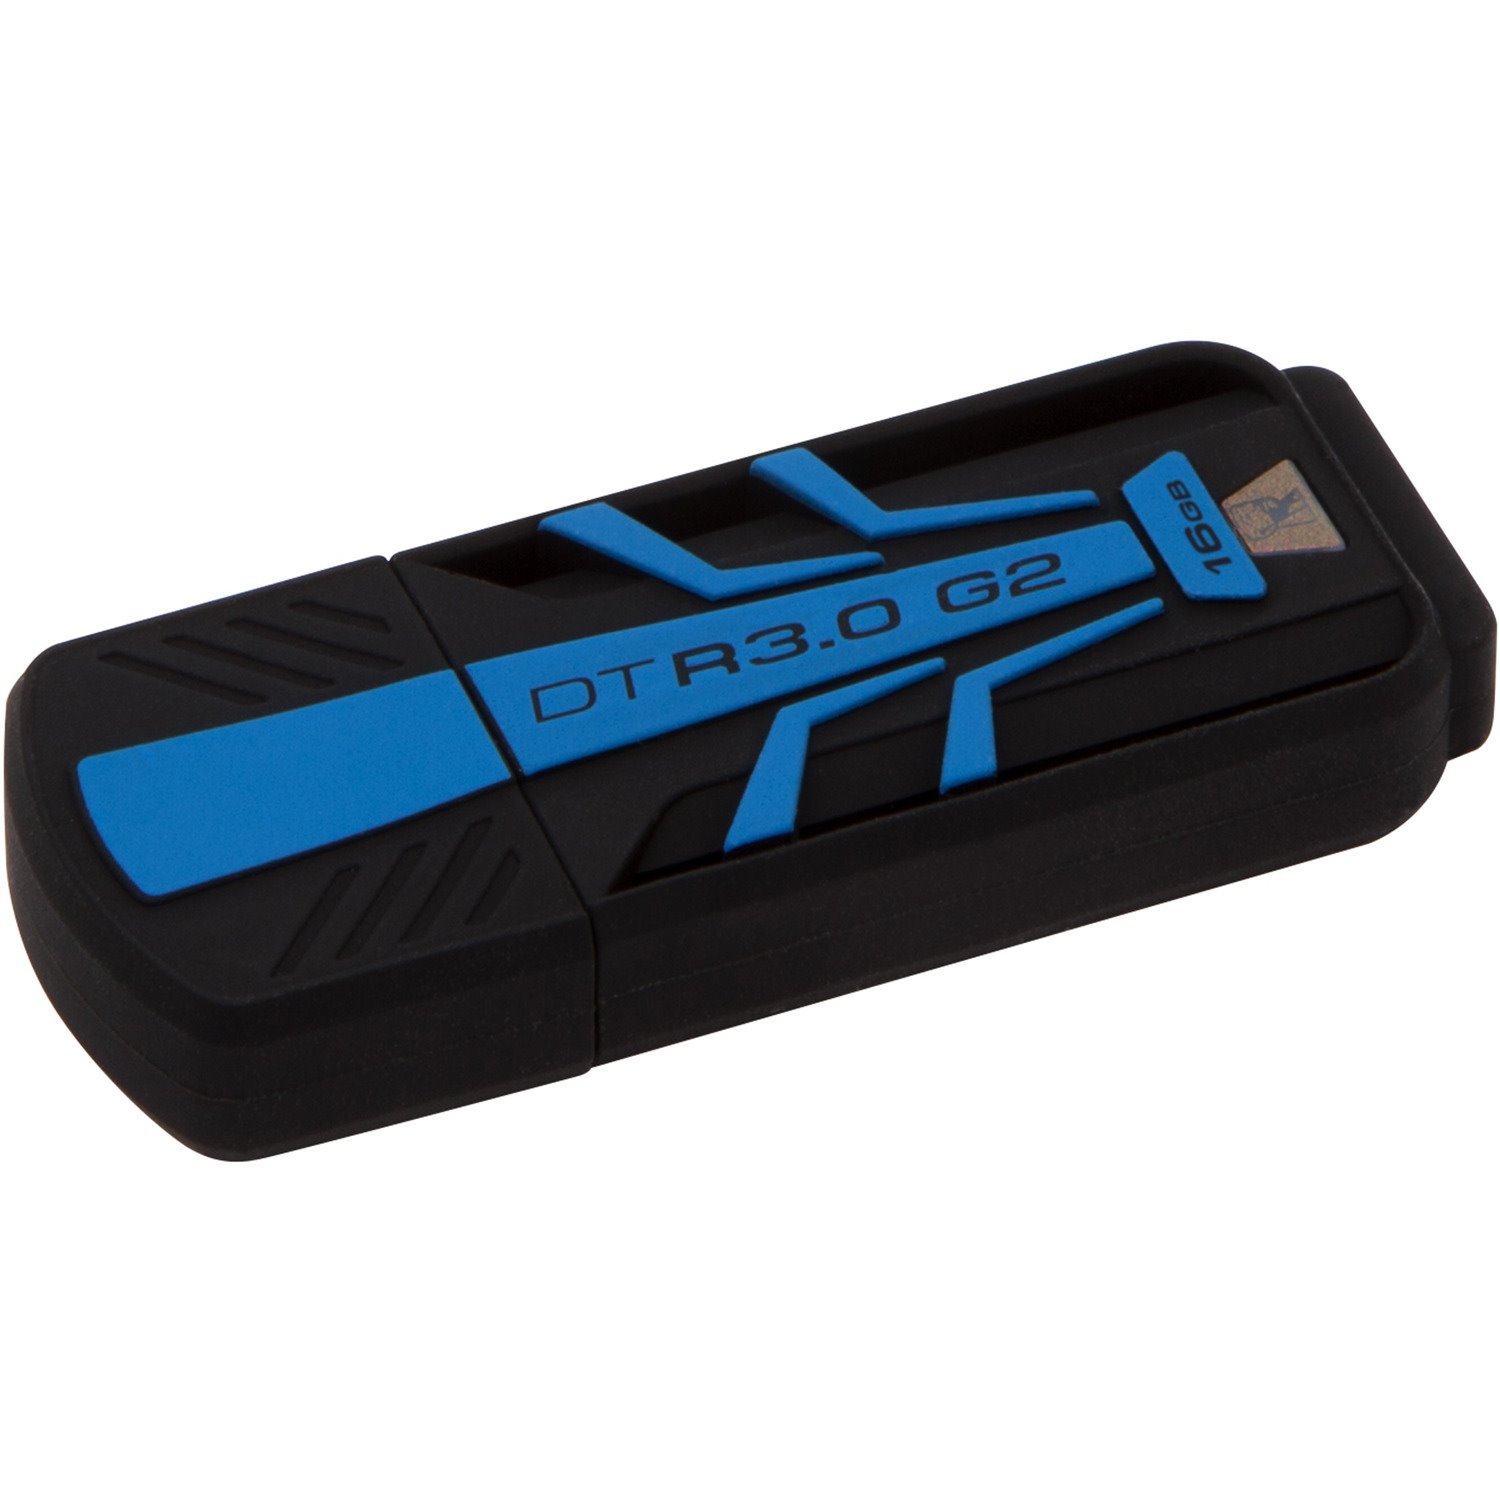 Kingston DataTraveler R3.0 G2 16 GB USB 3.0 Rugged Flash Drive